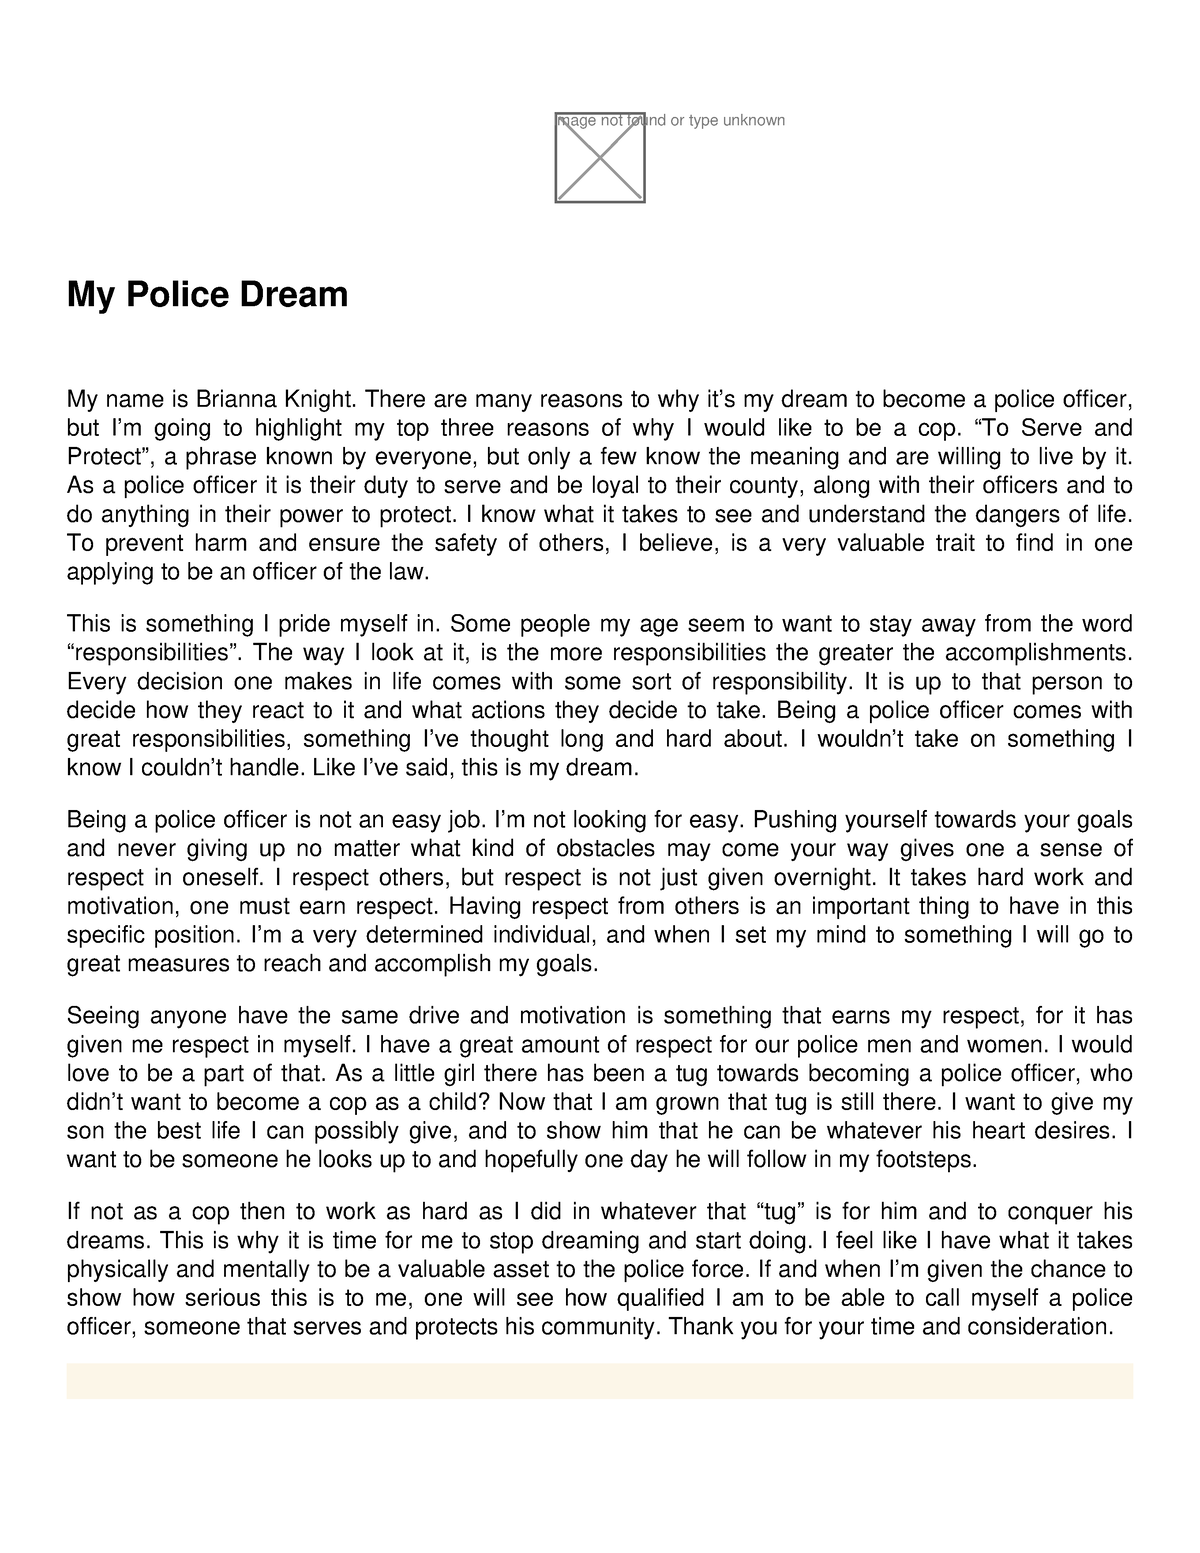 my dream essay police